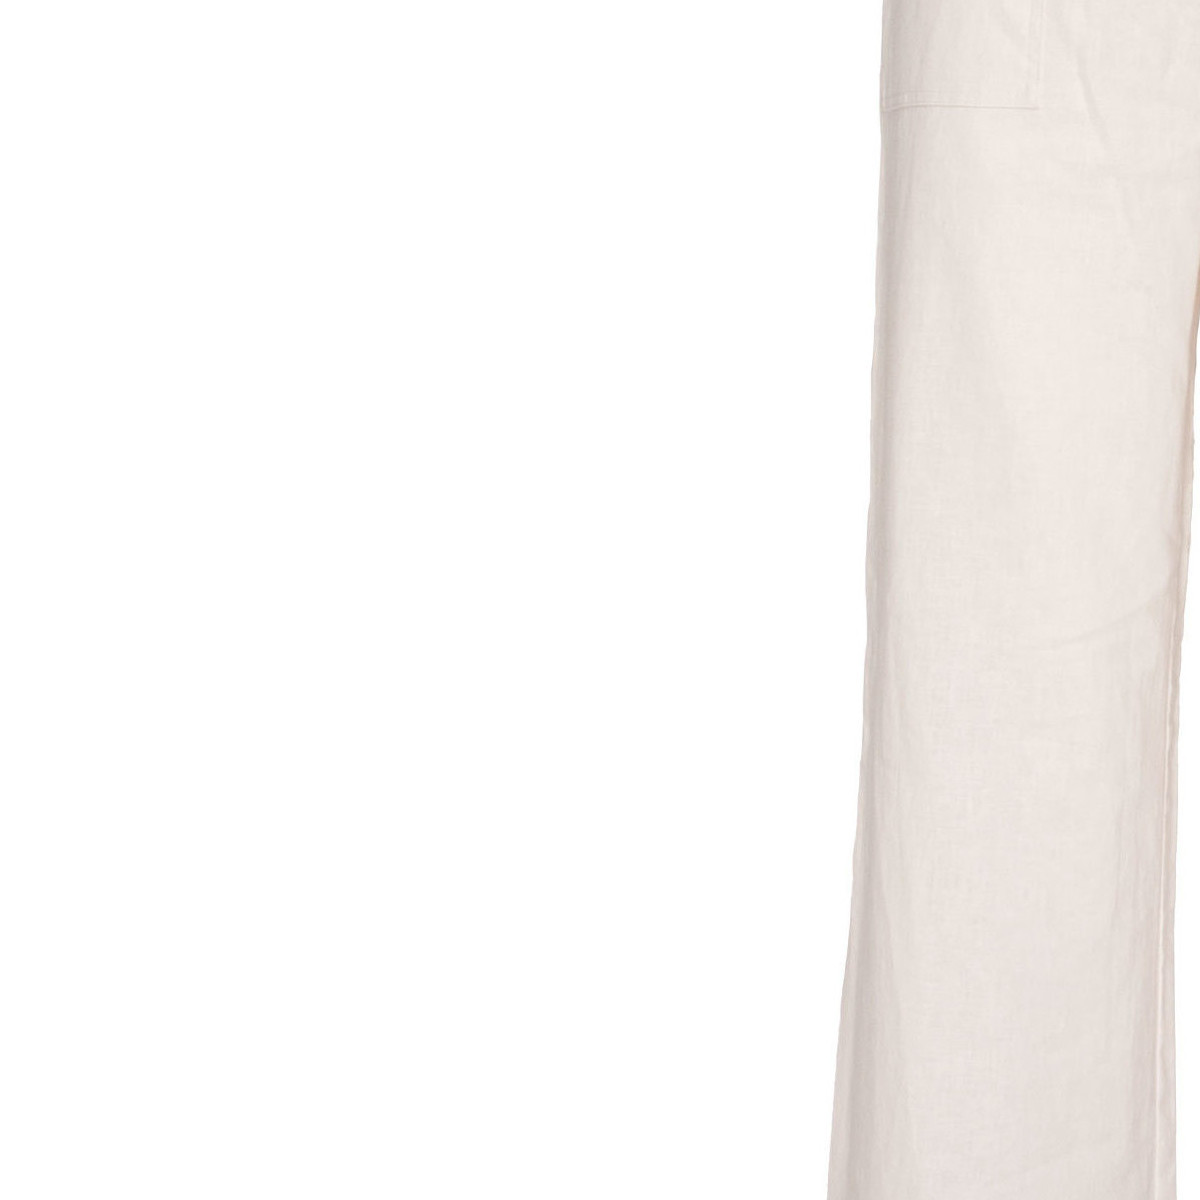 Abbigliamento Donna Pantaloni Pepe jeans LOURDES-WHITE Bianco